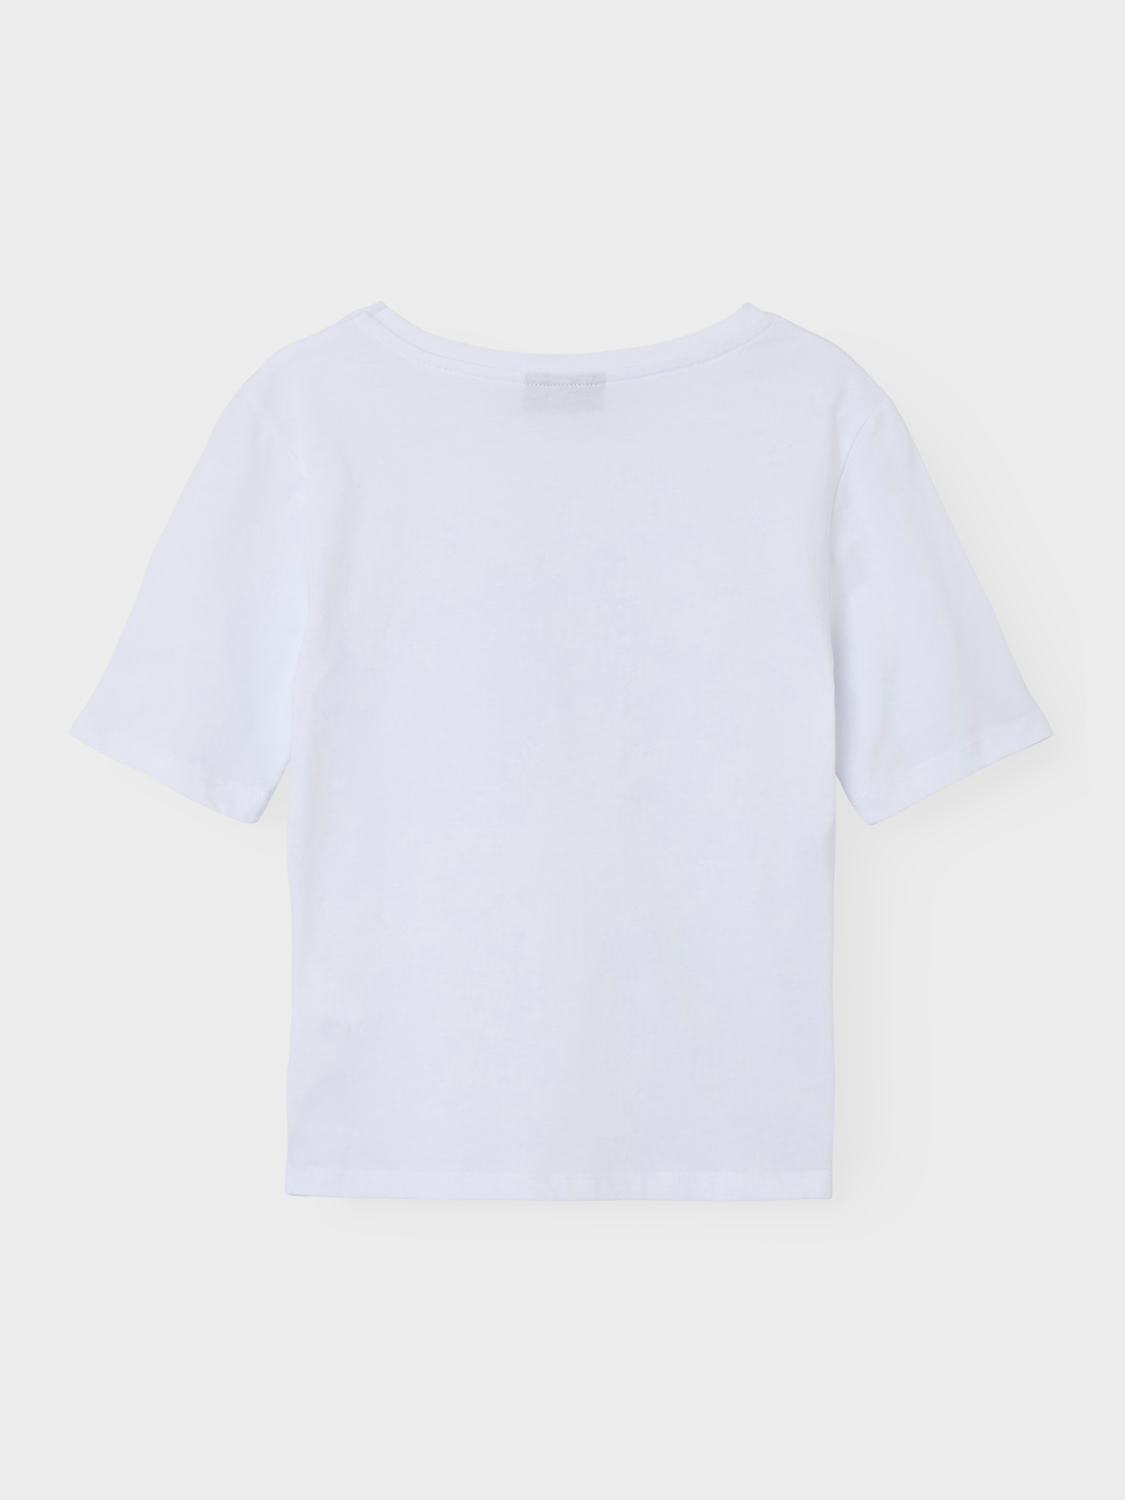 NLFFANET T-Shirts & Tops - Bright White